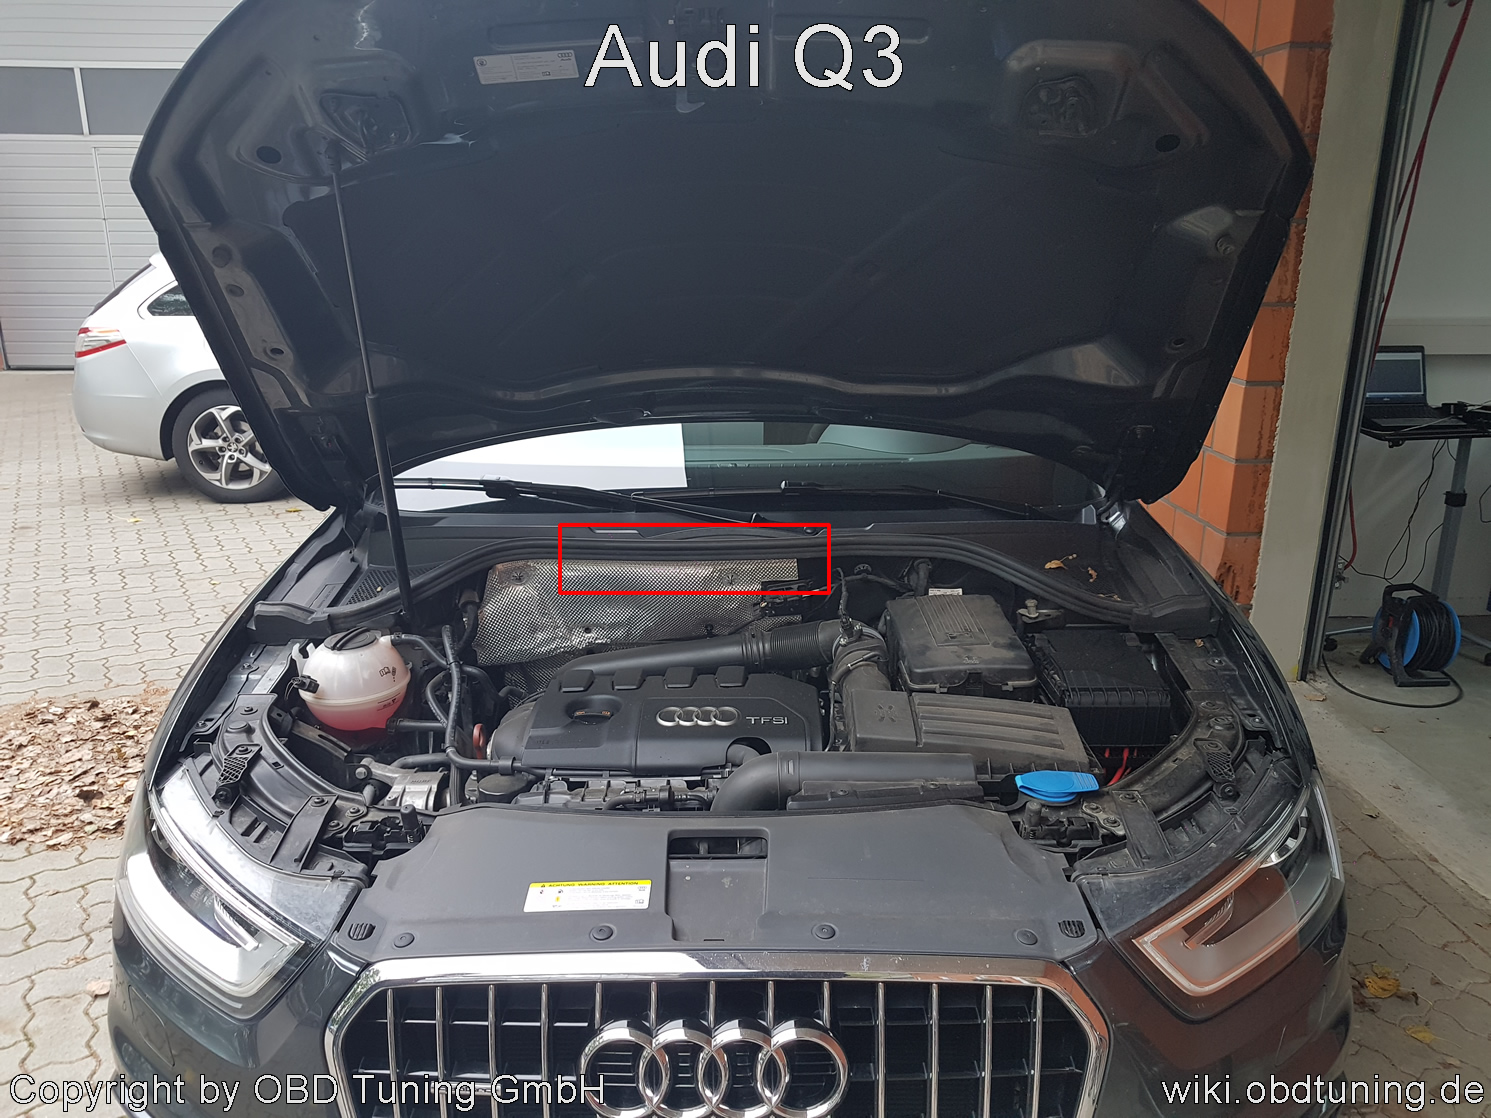 Audi Q3 ECU.jpg